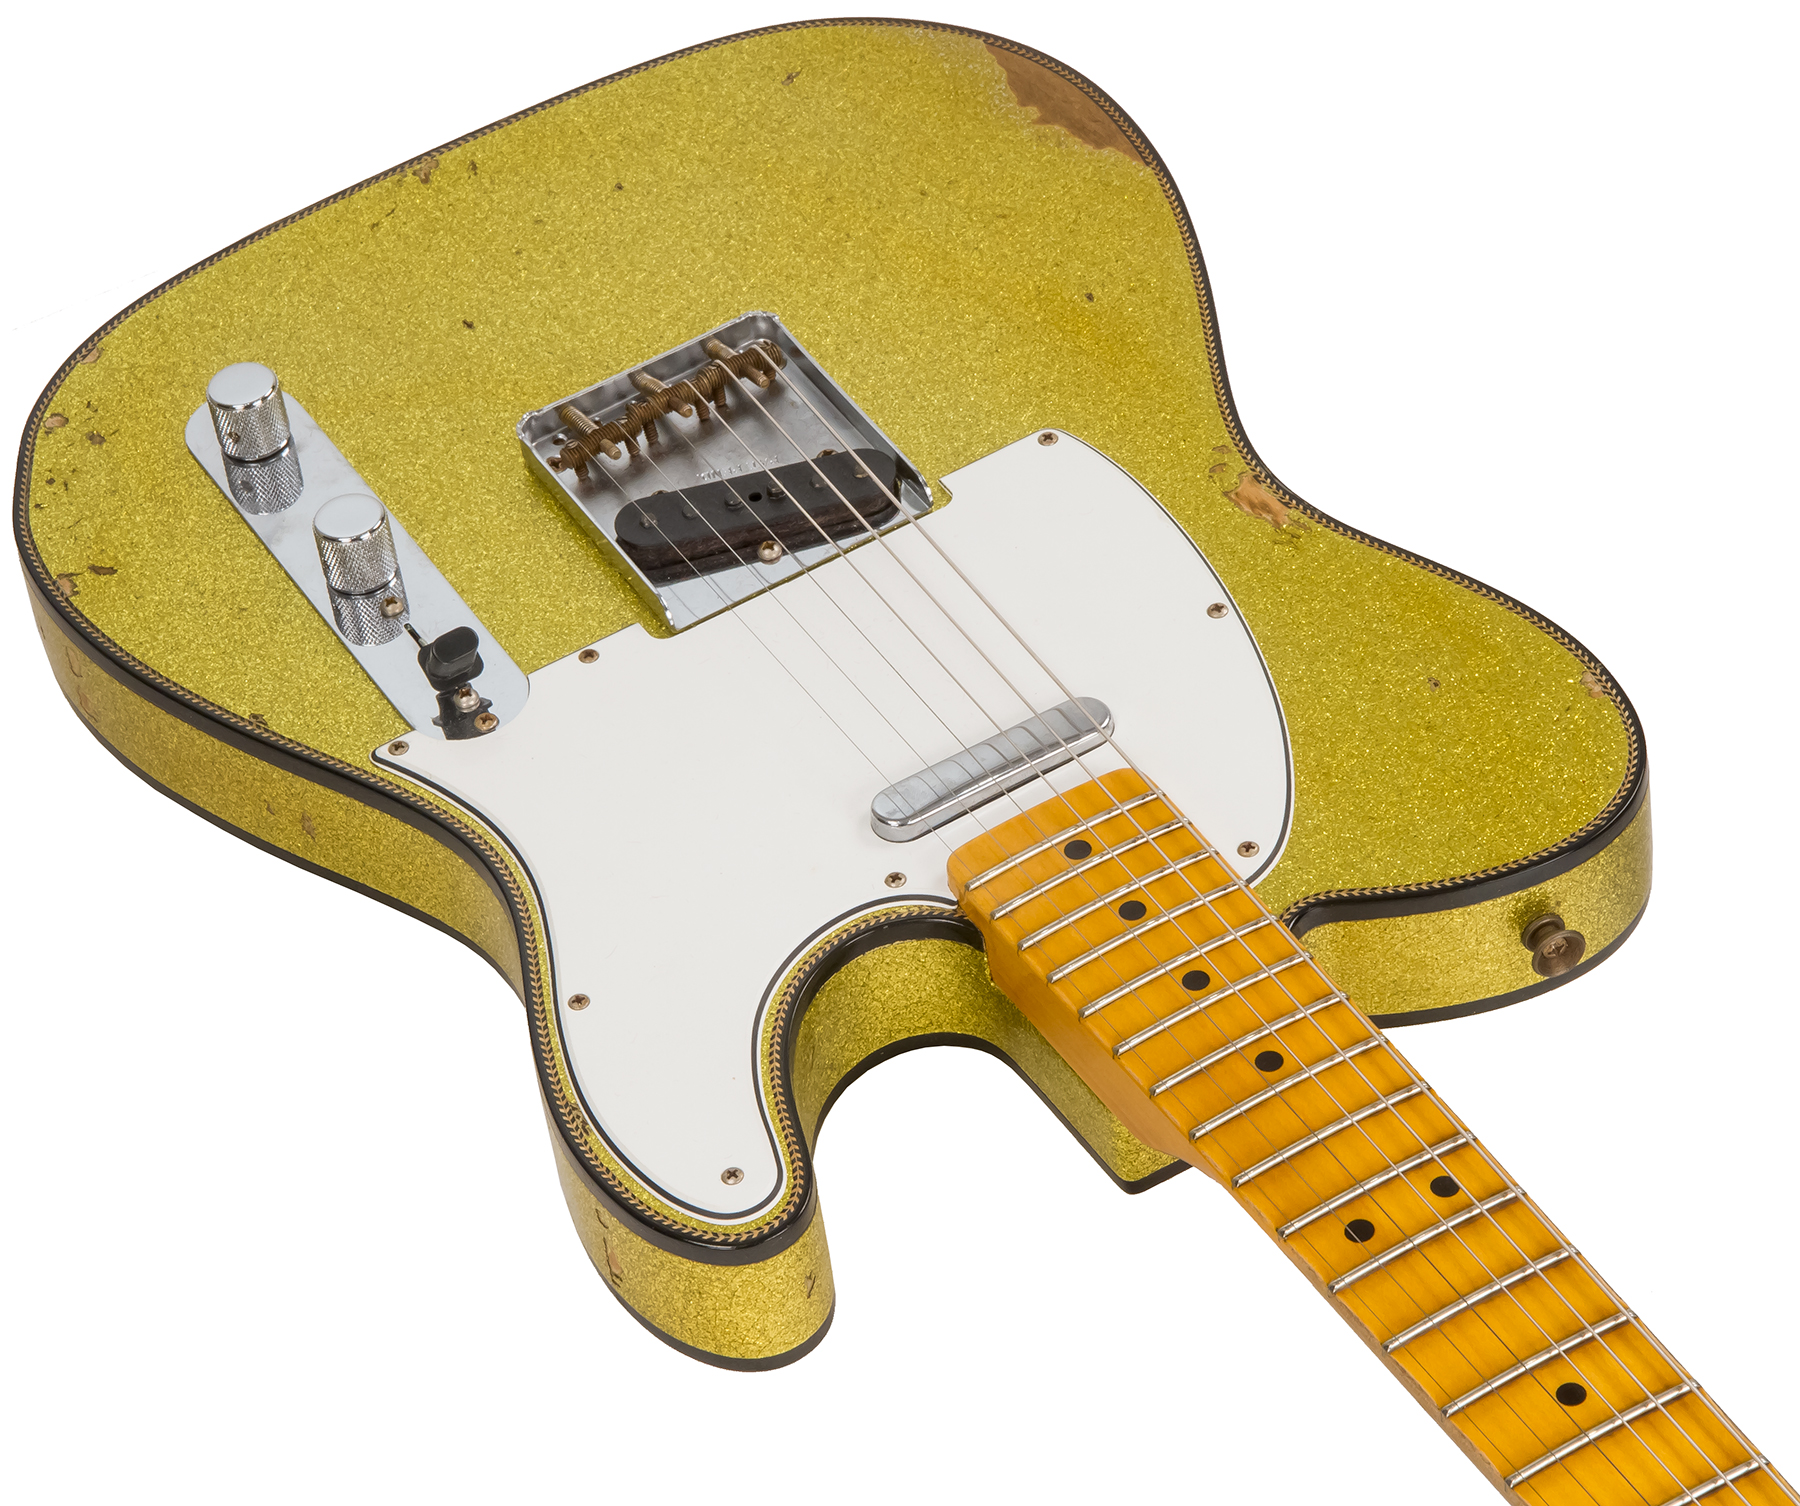 Fender Custom Shop Tele Custom 1963 2020 Ltd Rw #cz545983 - Relic Chartreuse Sparkle - Guitarra eléctrica con forma de tel - Variation 2